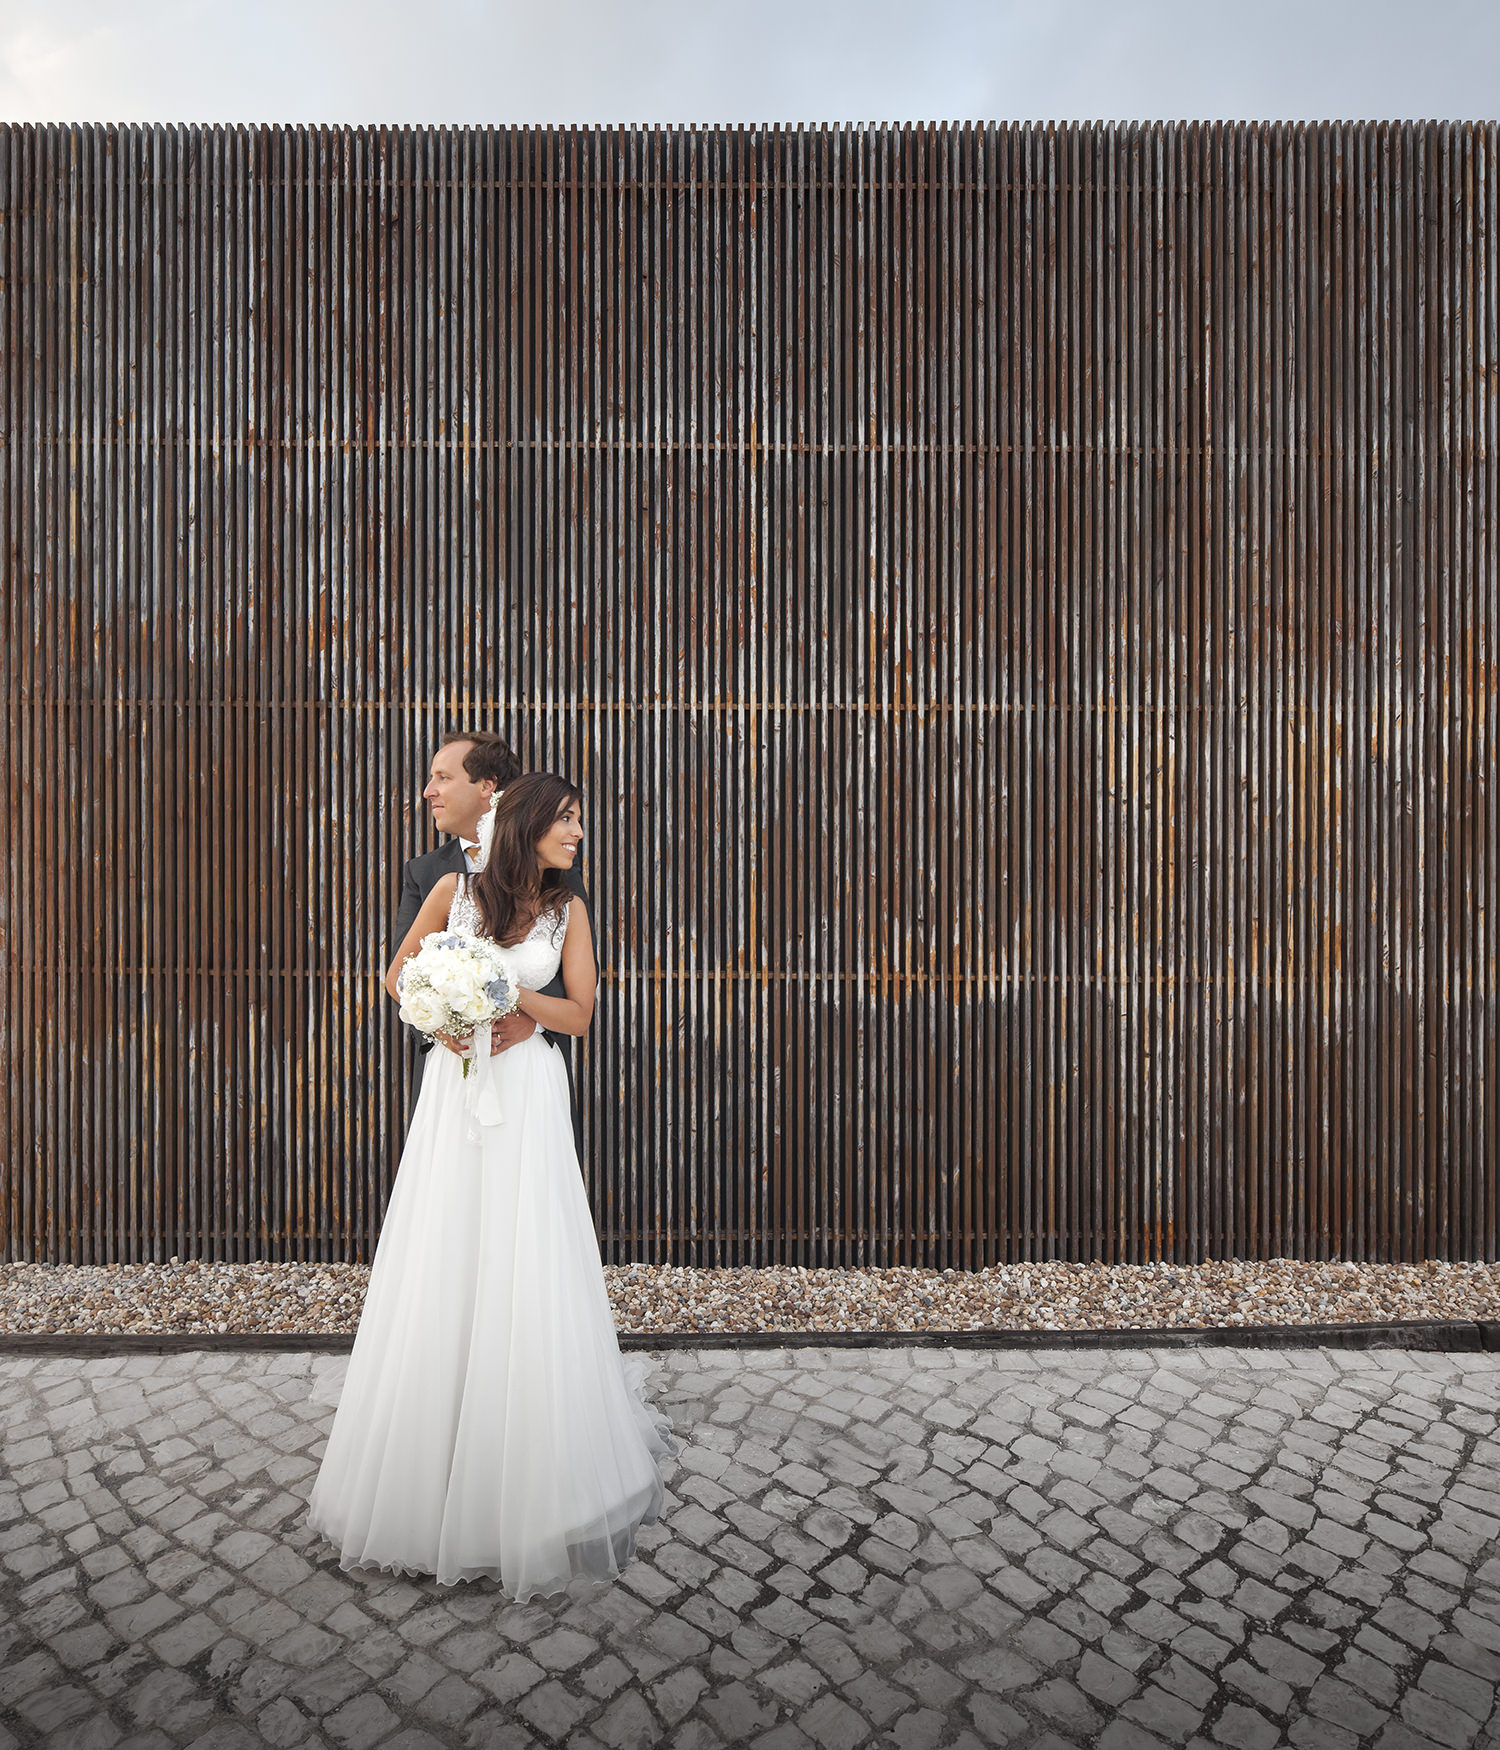 areias-seixo-wedding-photographer-terra-fotografia-151.jpg